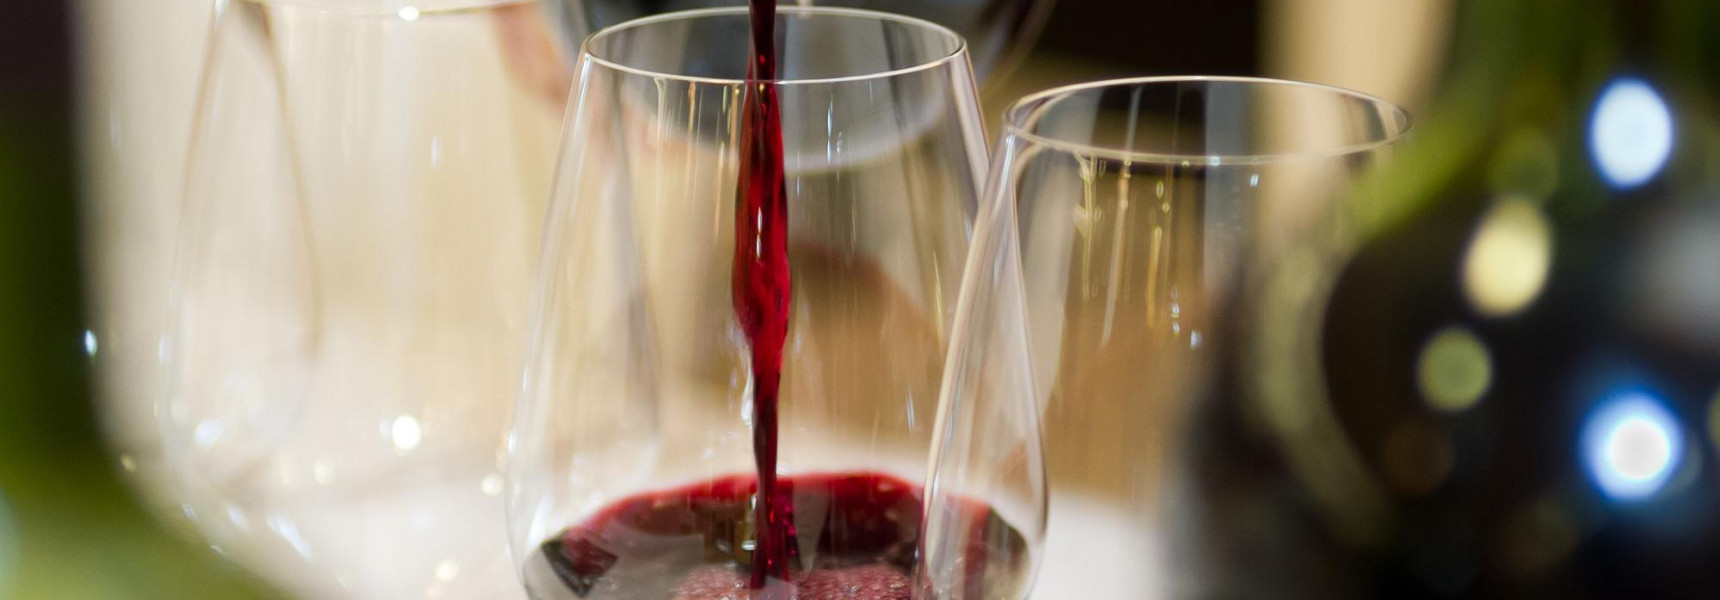 How to Select Seasonal Wine in Paris